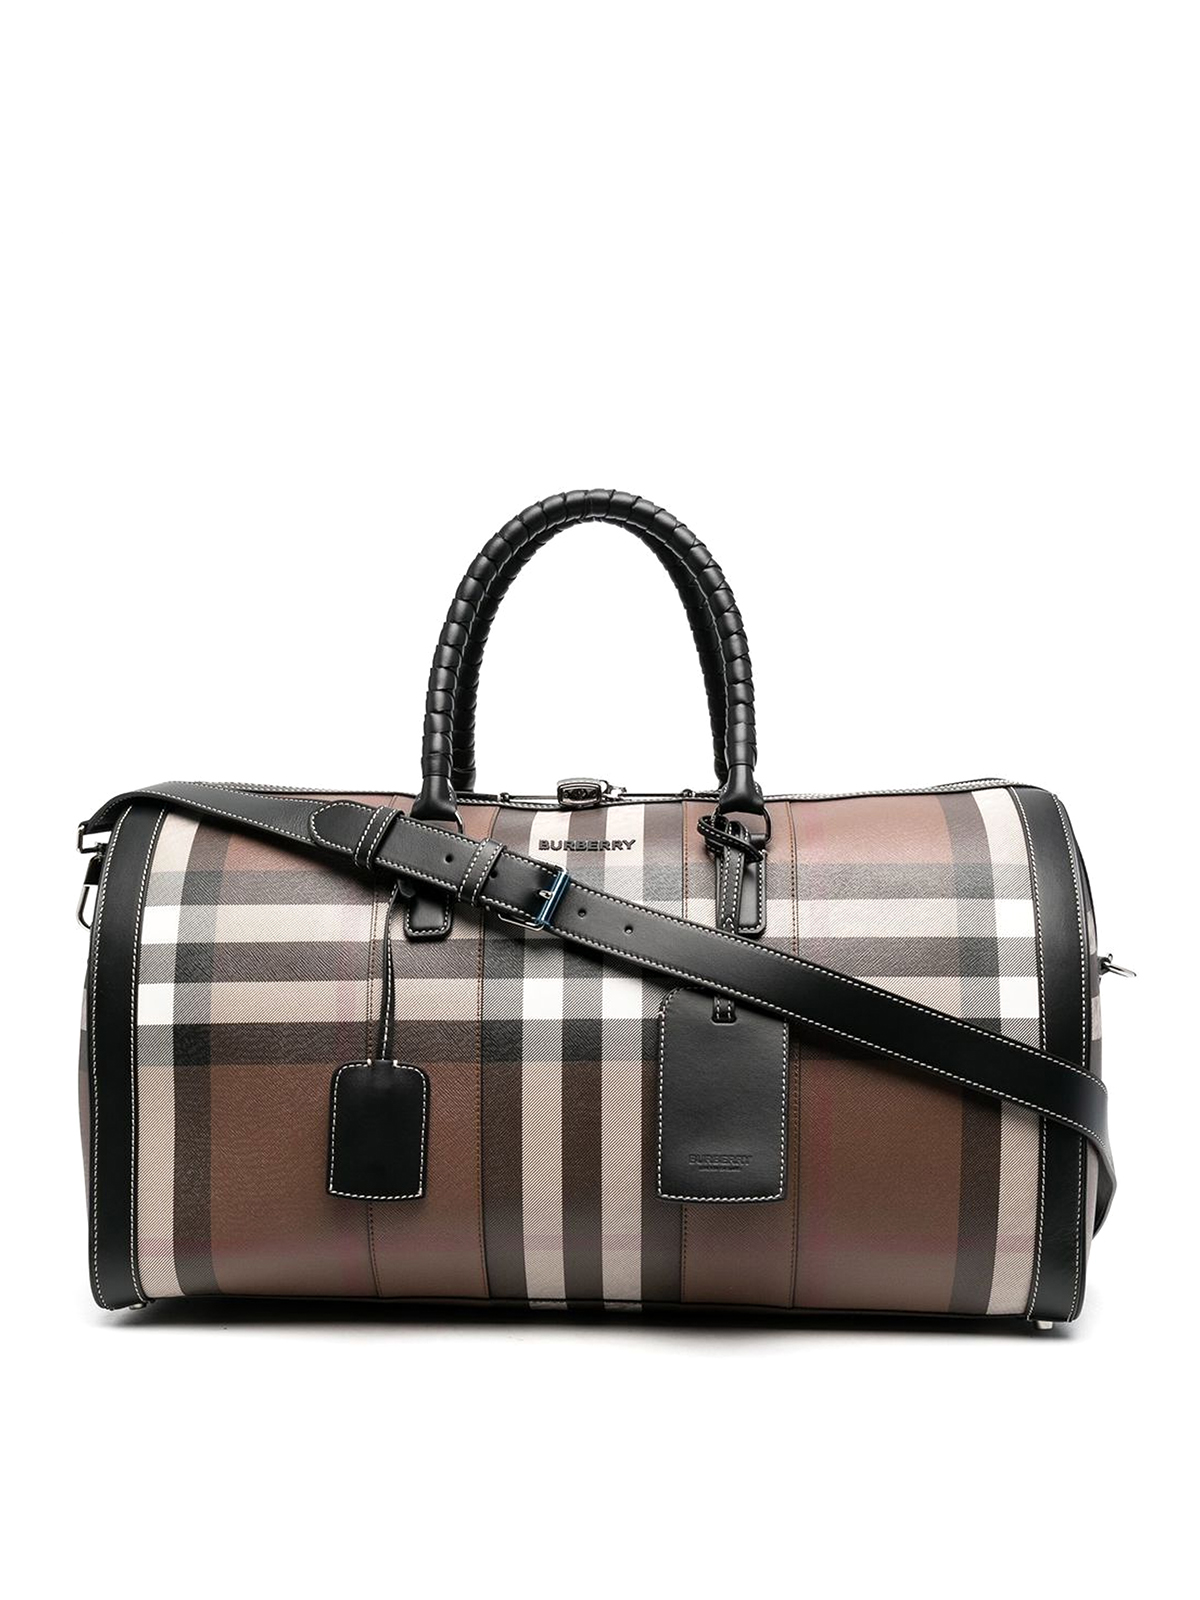 Luggage & Travel bags Burberry - Logo detail check duffle bag - 8052773